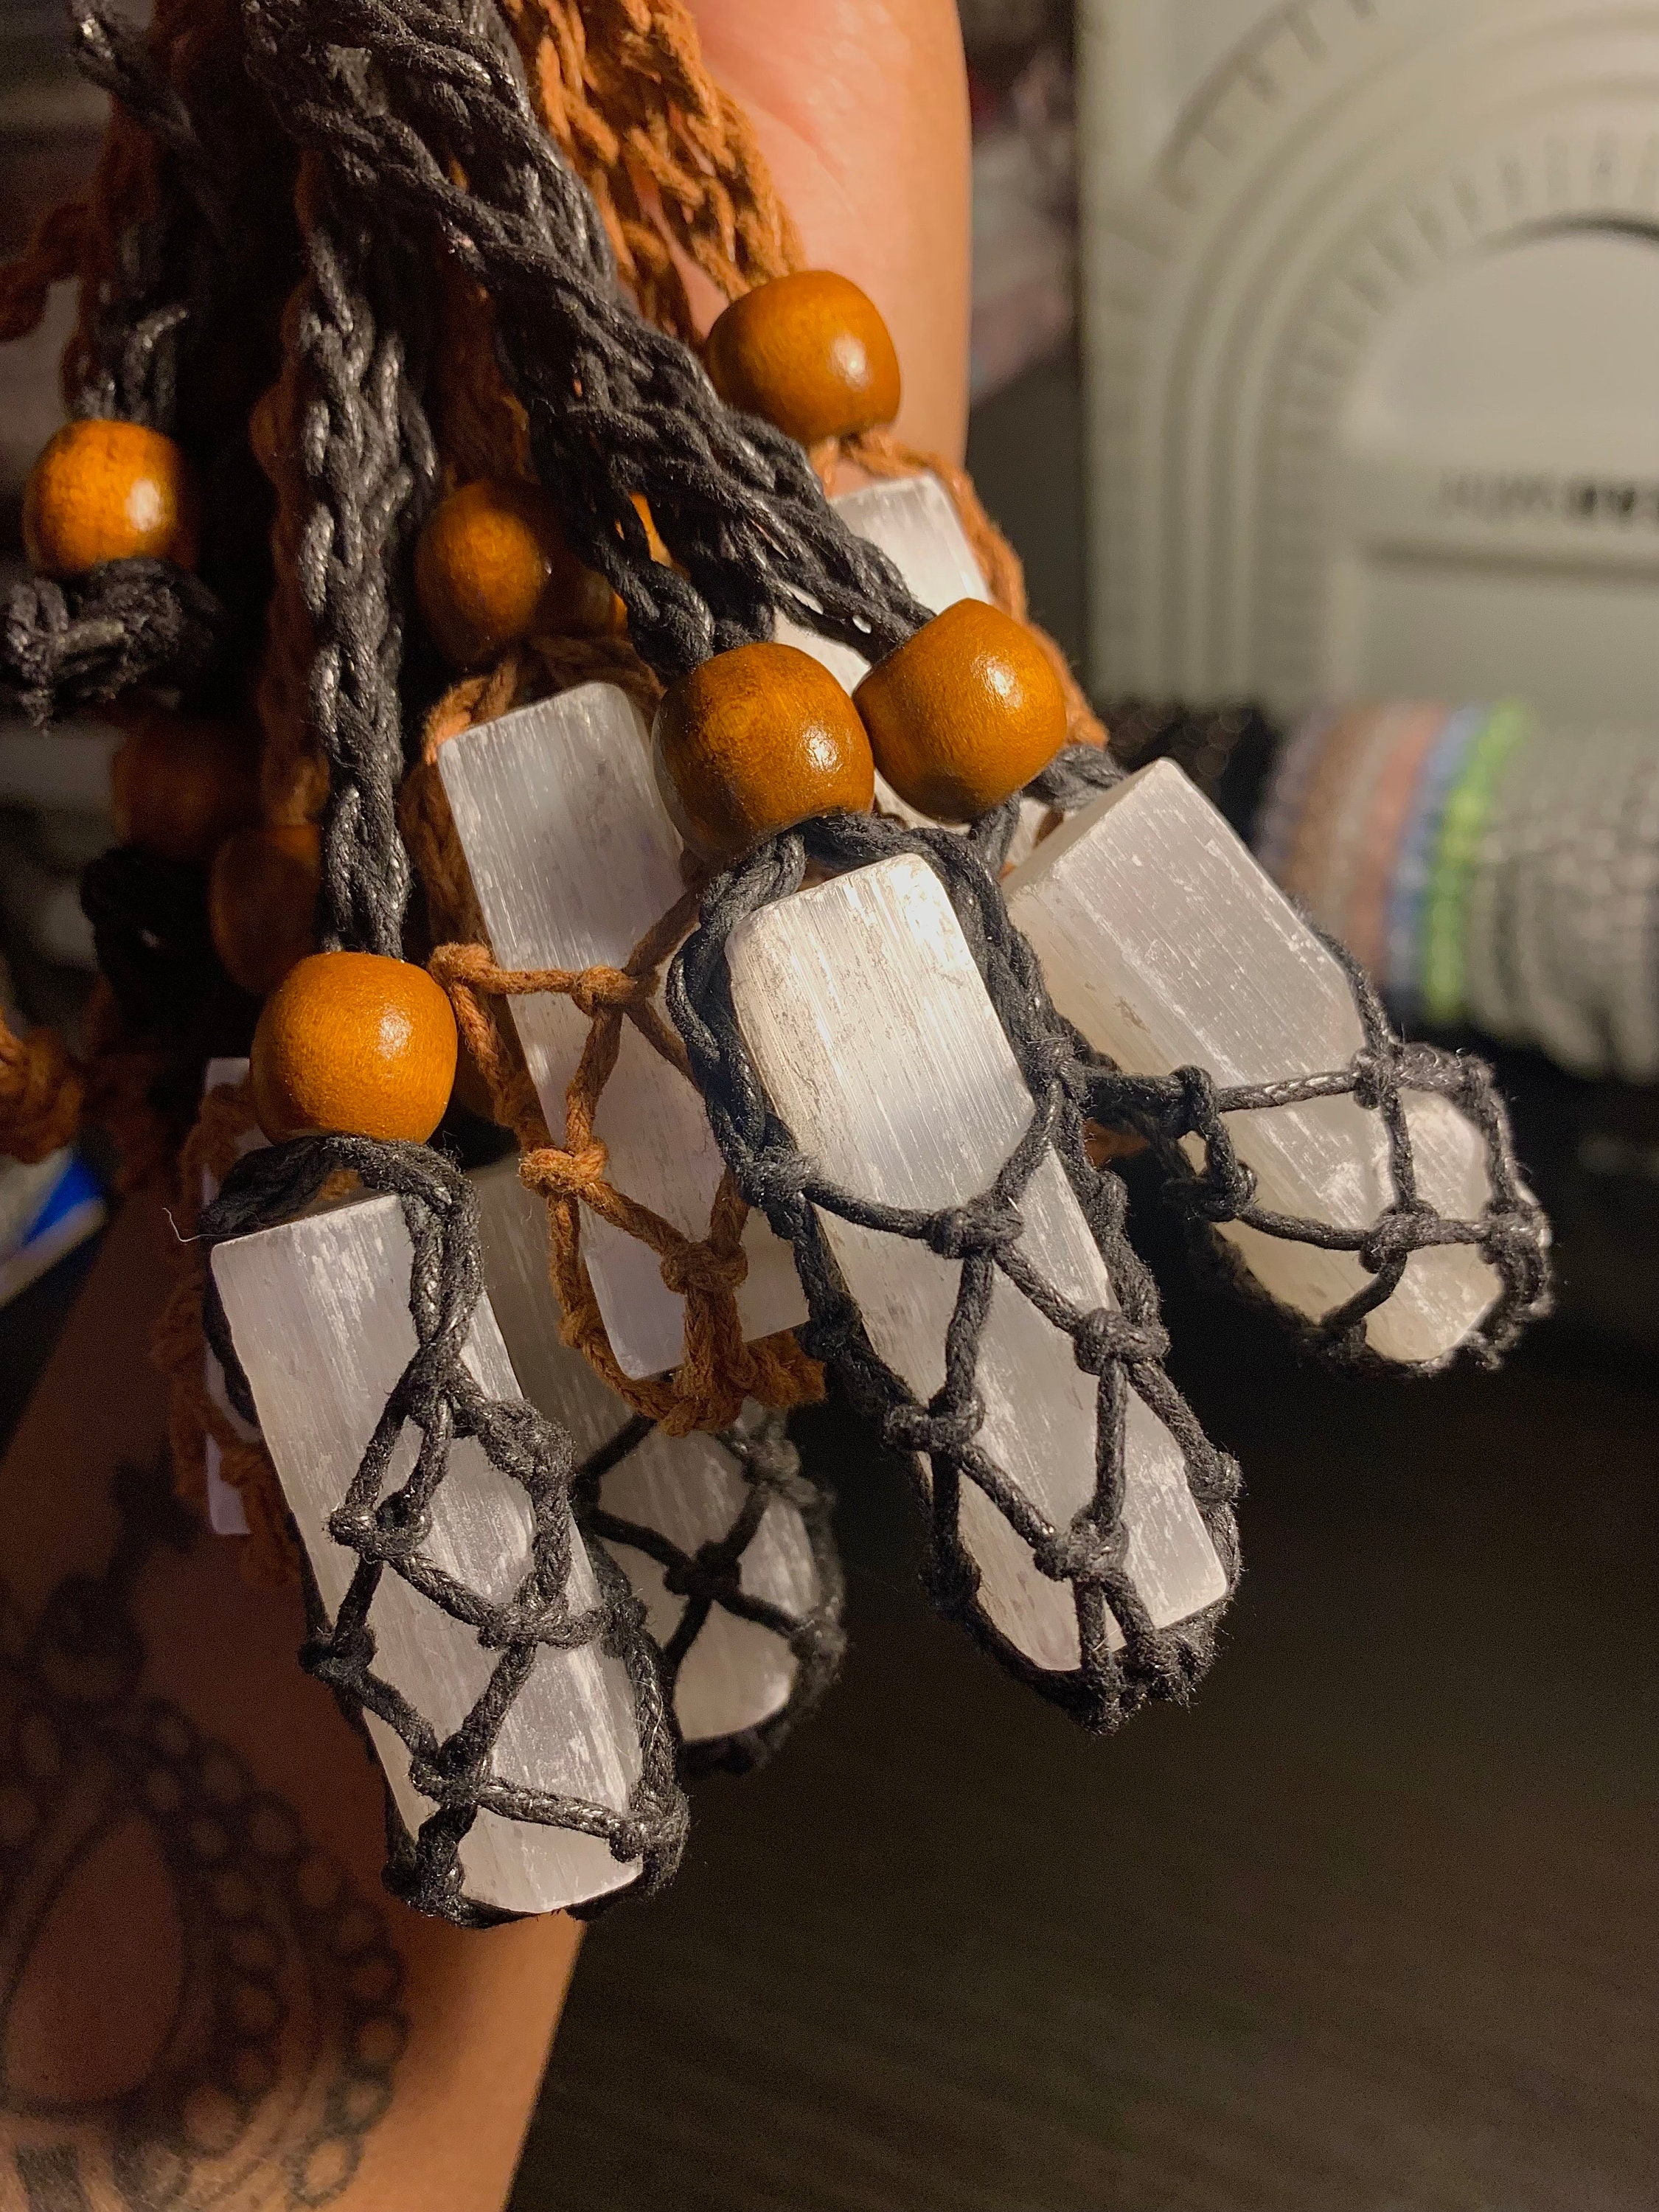 Handmade Macrame Crystal Holder Necklace-empty Stone Basket